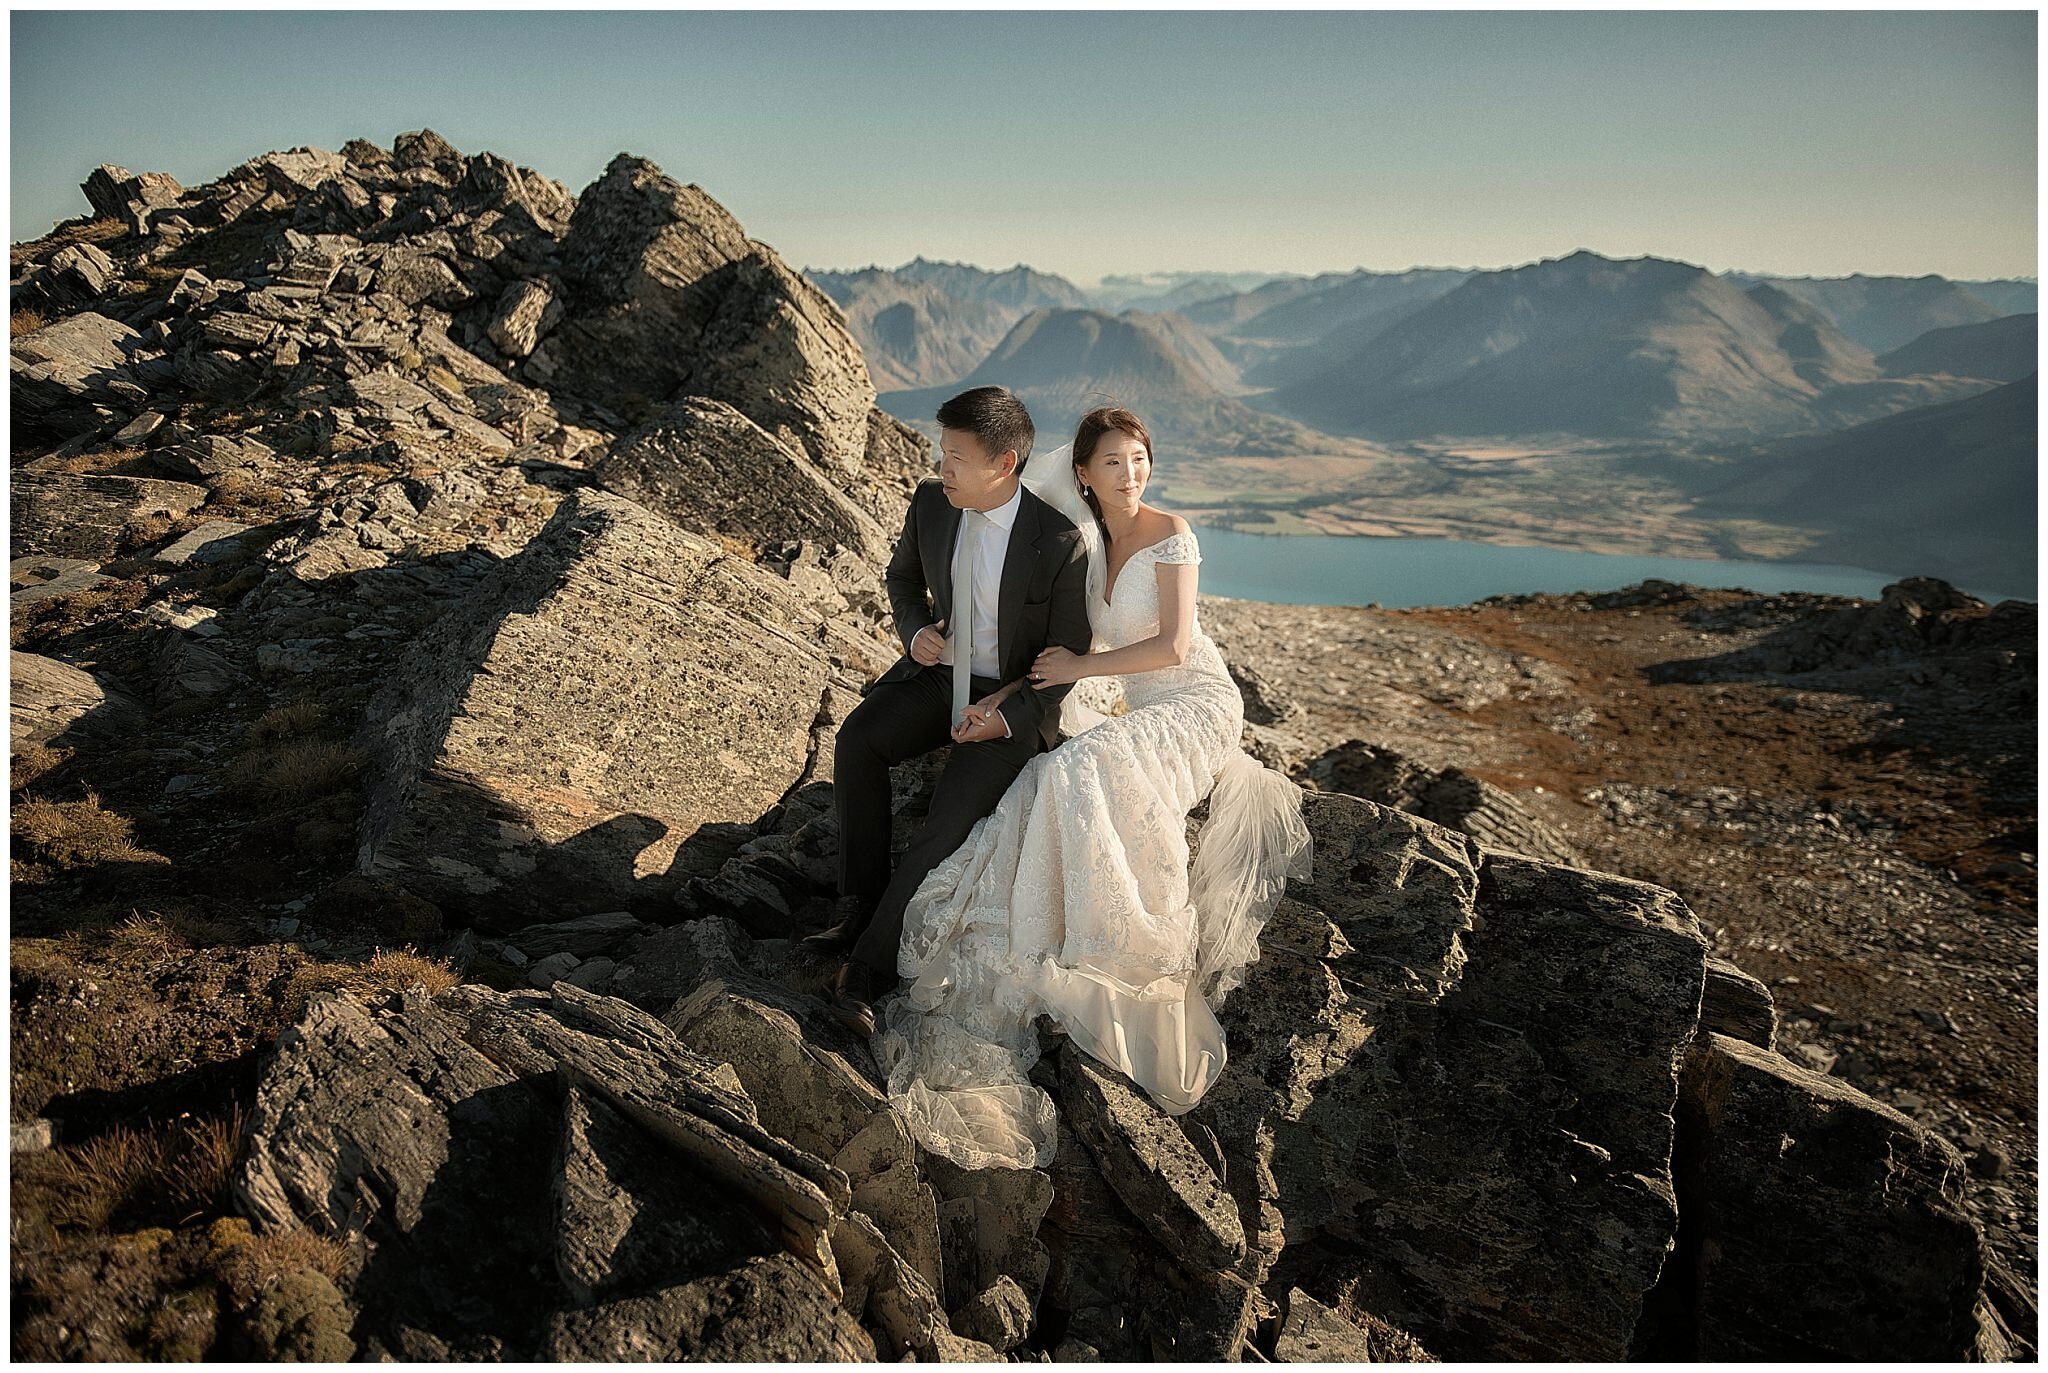 New Zealand South Island Queenstown Heliwedding Pre-Wedding Shoot Photographer 뉴질랜드 퀸즈타운 헬리콥터 웨딩 스냅 사진 포토 그래퍼 (Copy)